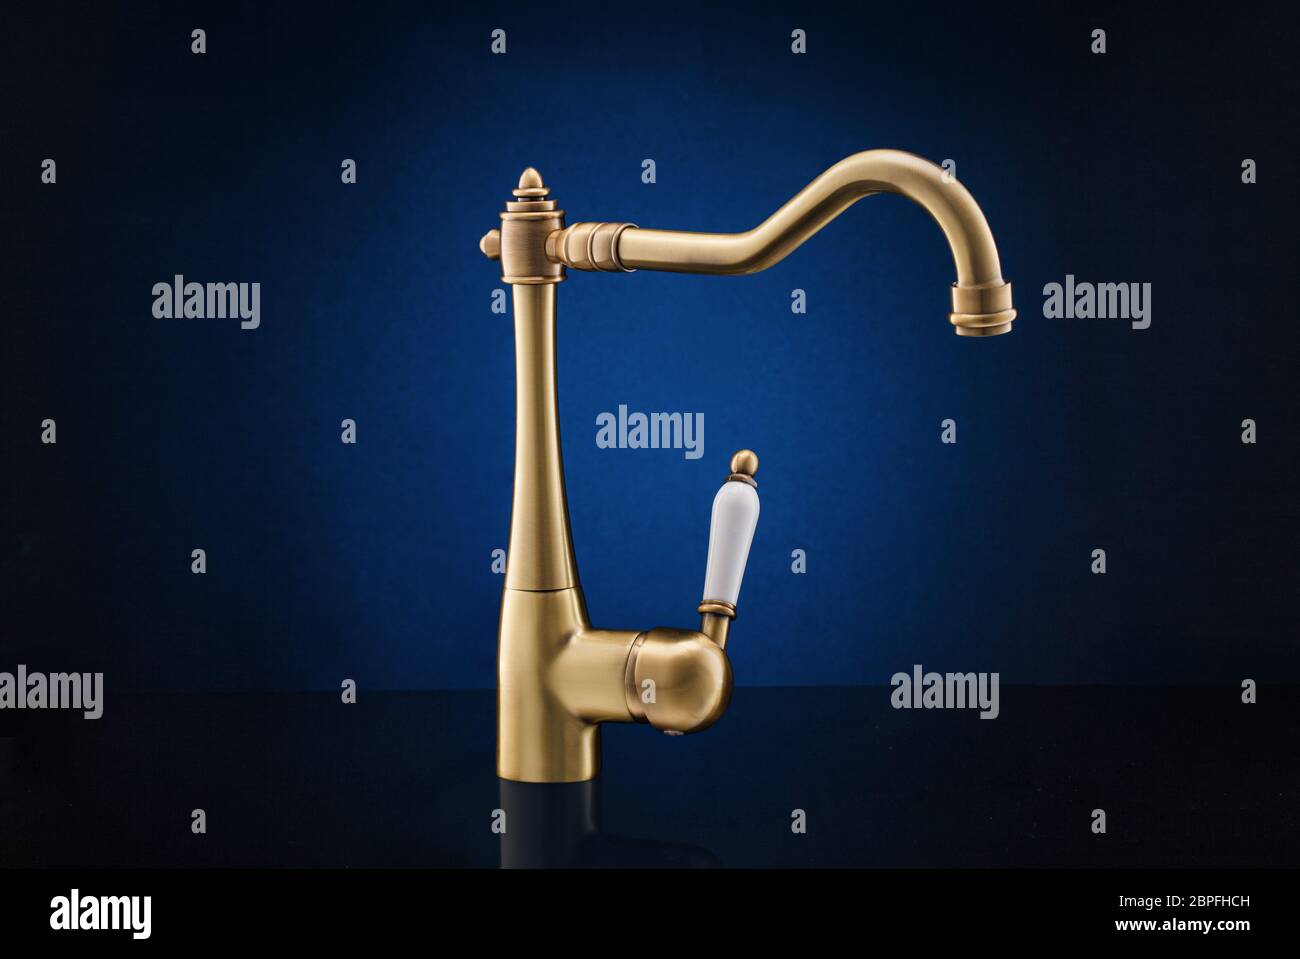 Modern kitchen faucet against dark blue background. Stock Photo